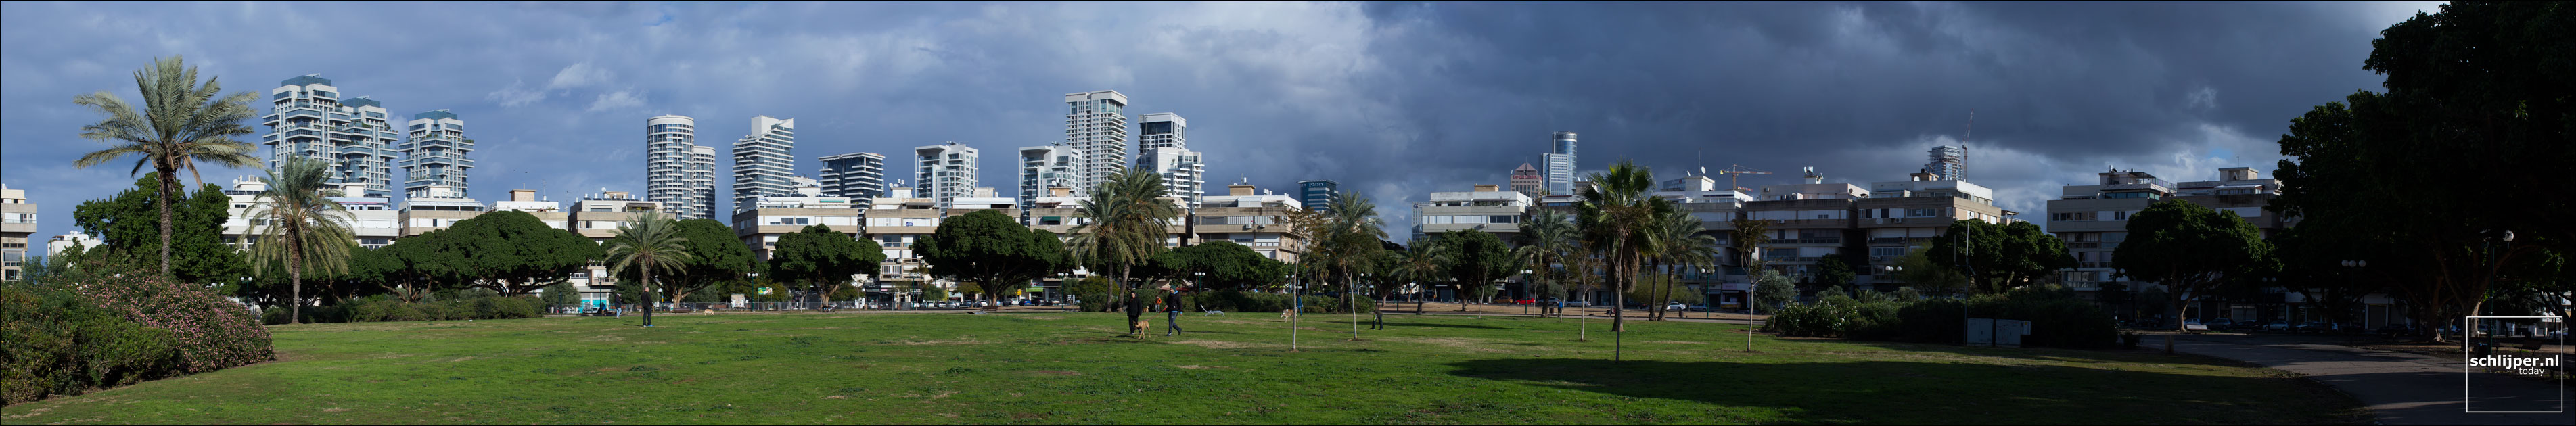 Israel, Tel Aviv, 2 januari 2016